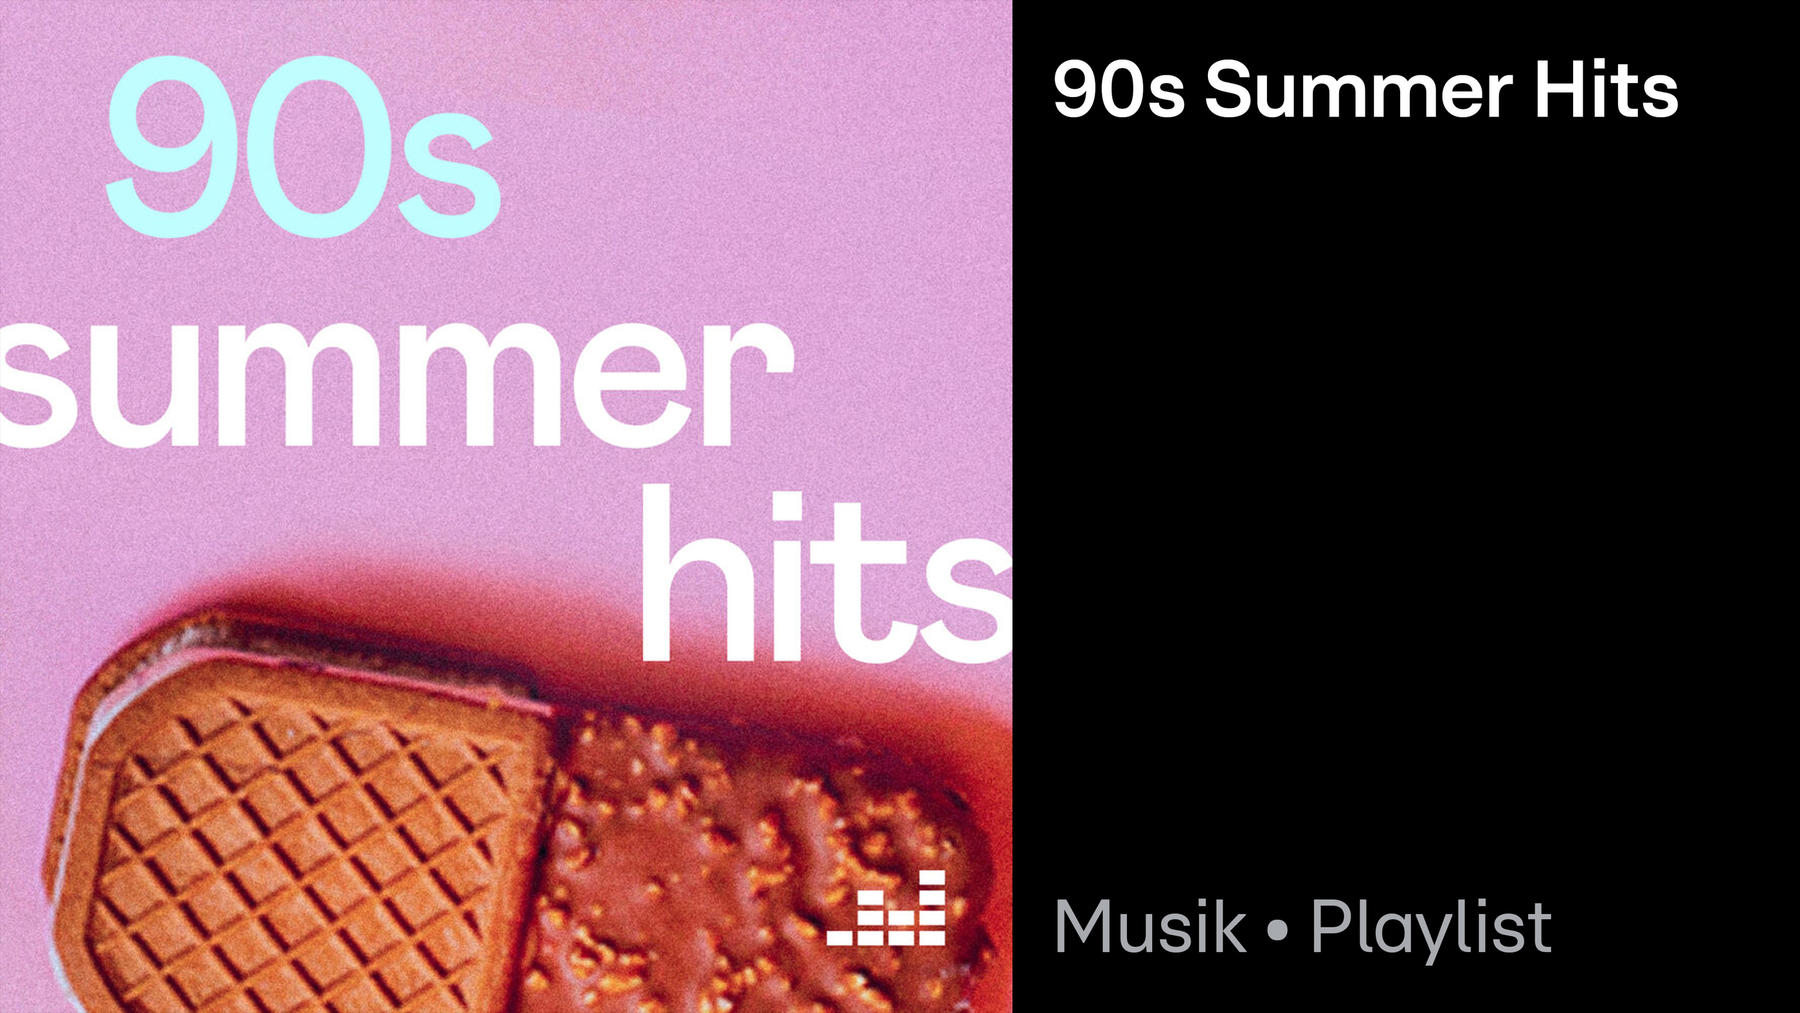 90s Summer Hits Playlist